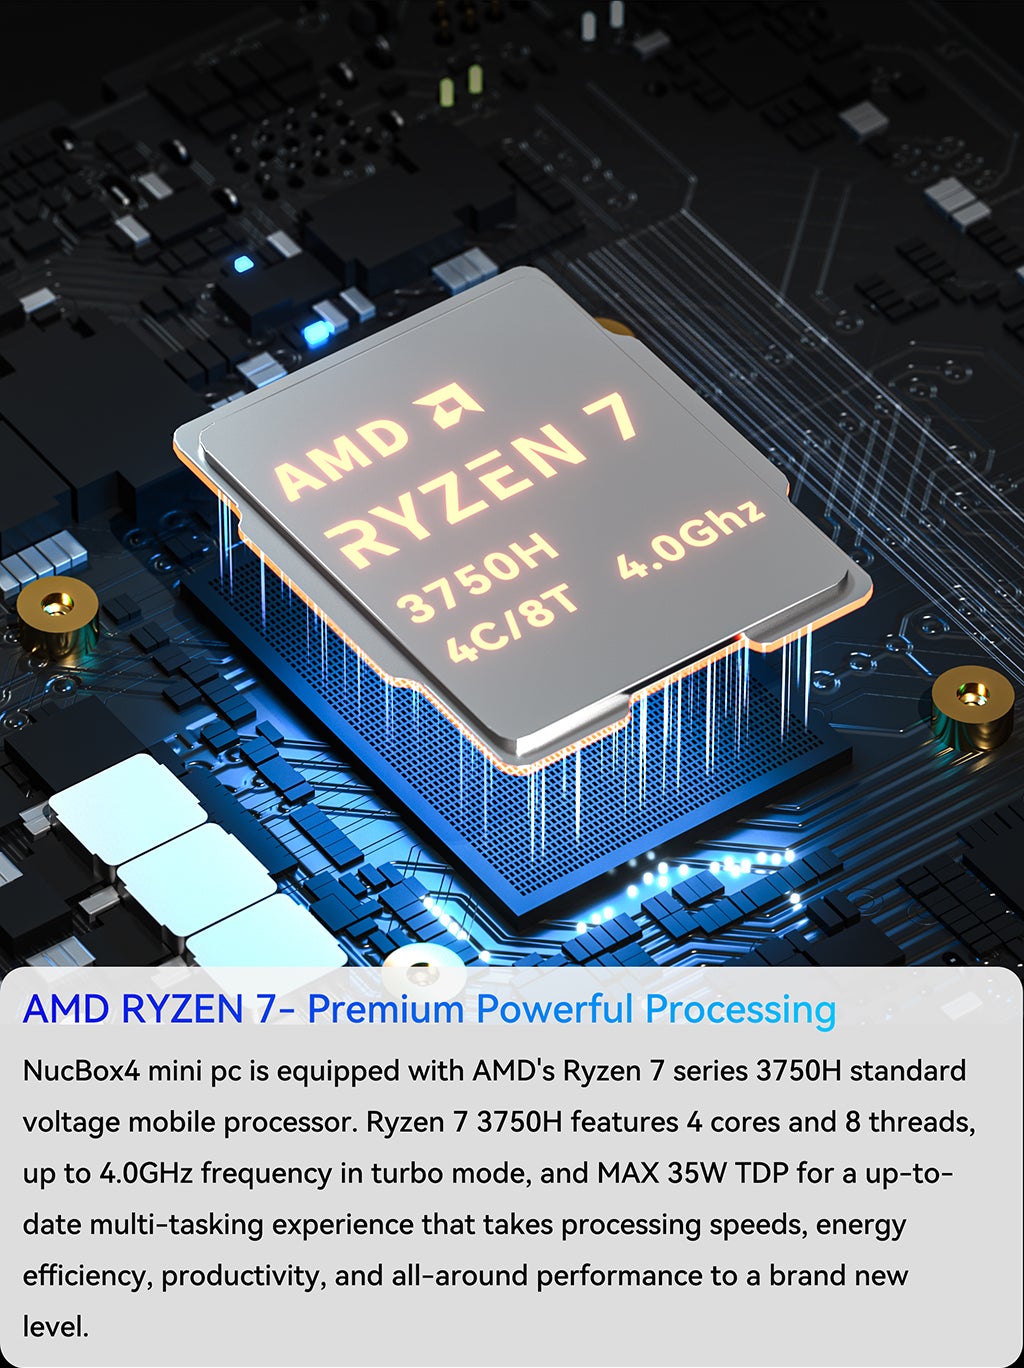 GMKTEC-NucBox4-AMD-Ryzen7-3750H-40GHz-Radeon-RX-Vega-10-Mini-PC-16GB-DDR4-2400-RAM-512GB-NVMe-SSD-Wi-1931304-2